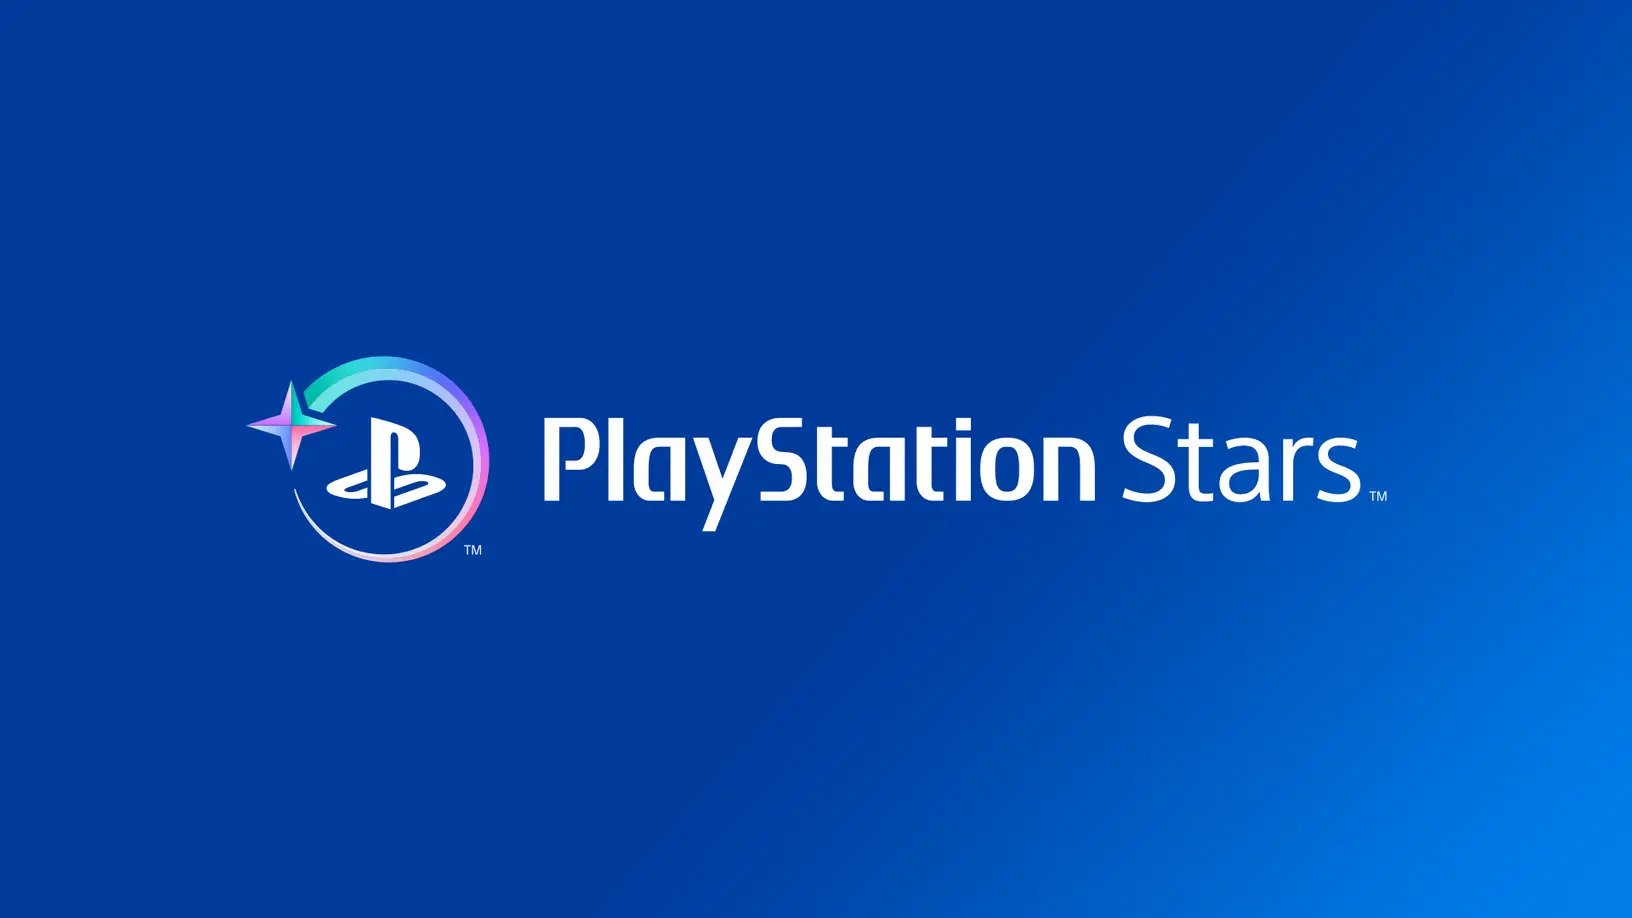 PlayStation Stars is Sony's answer to Microsoft Rewards loyalty program